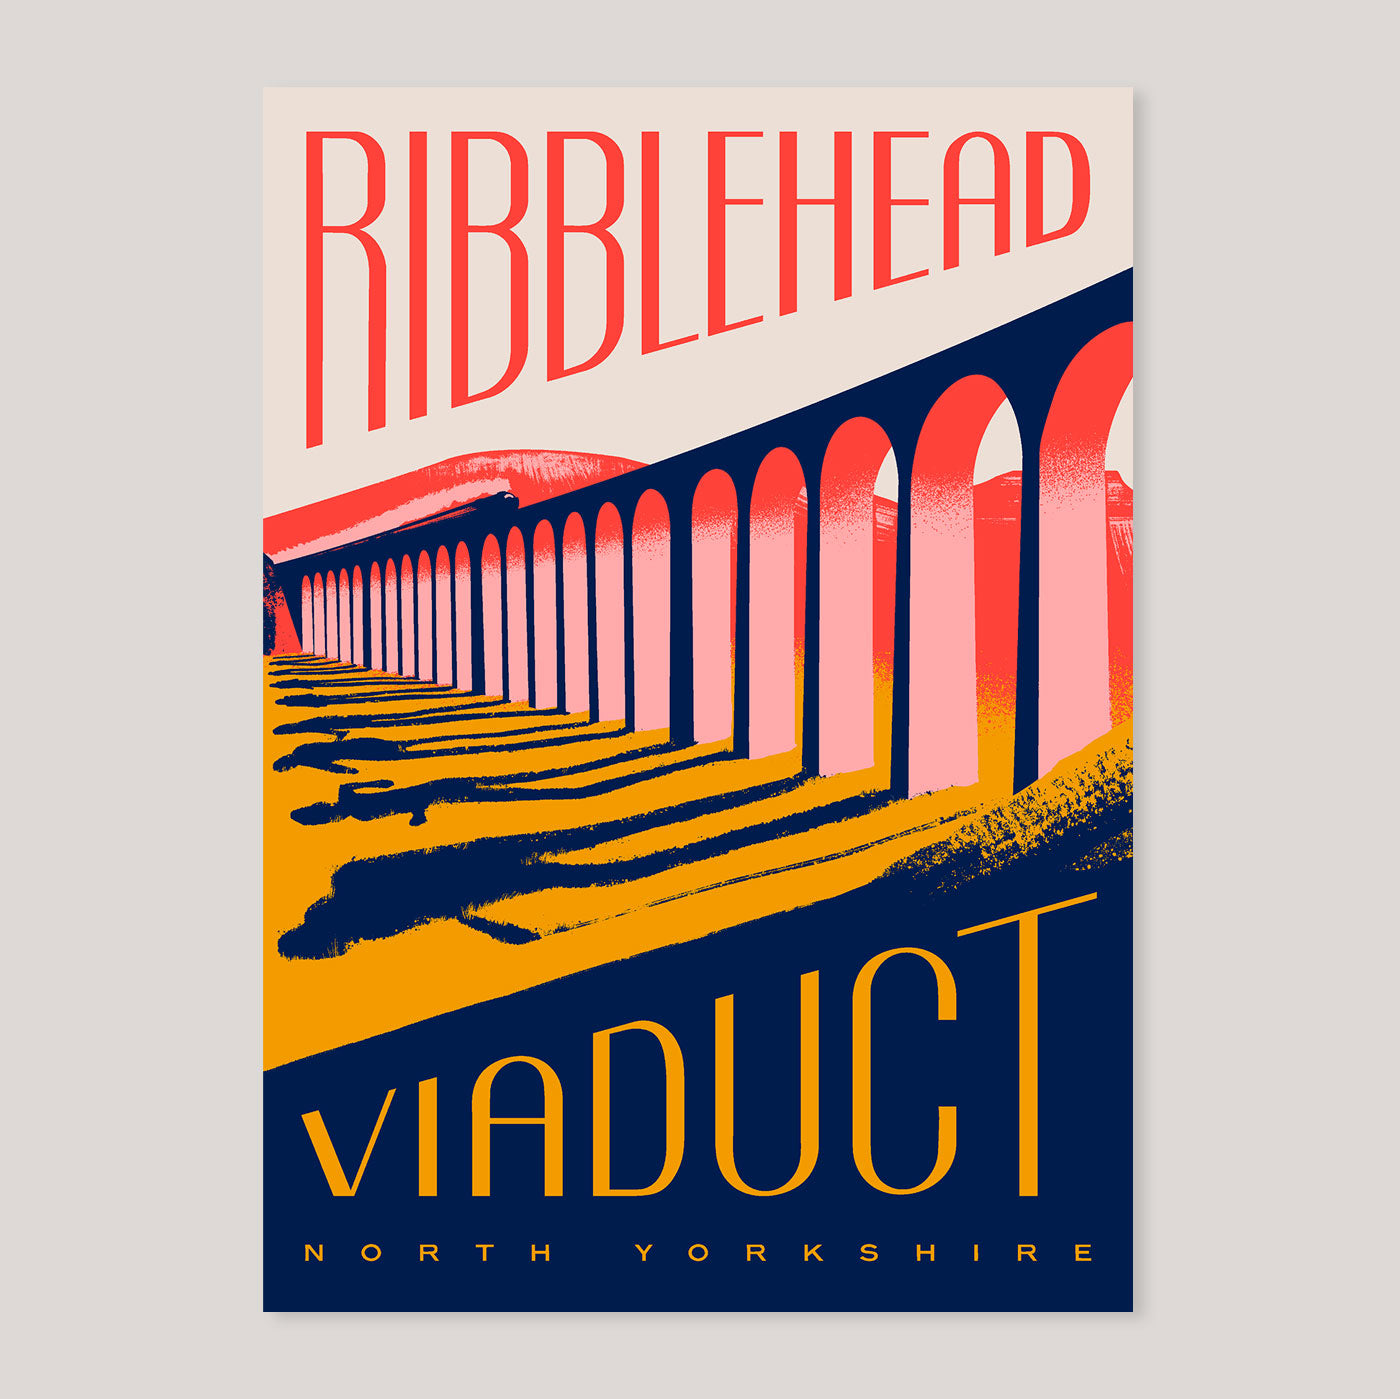 Ribblehead Viaduct A2 Screenprint | Tall Paul Kelly